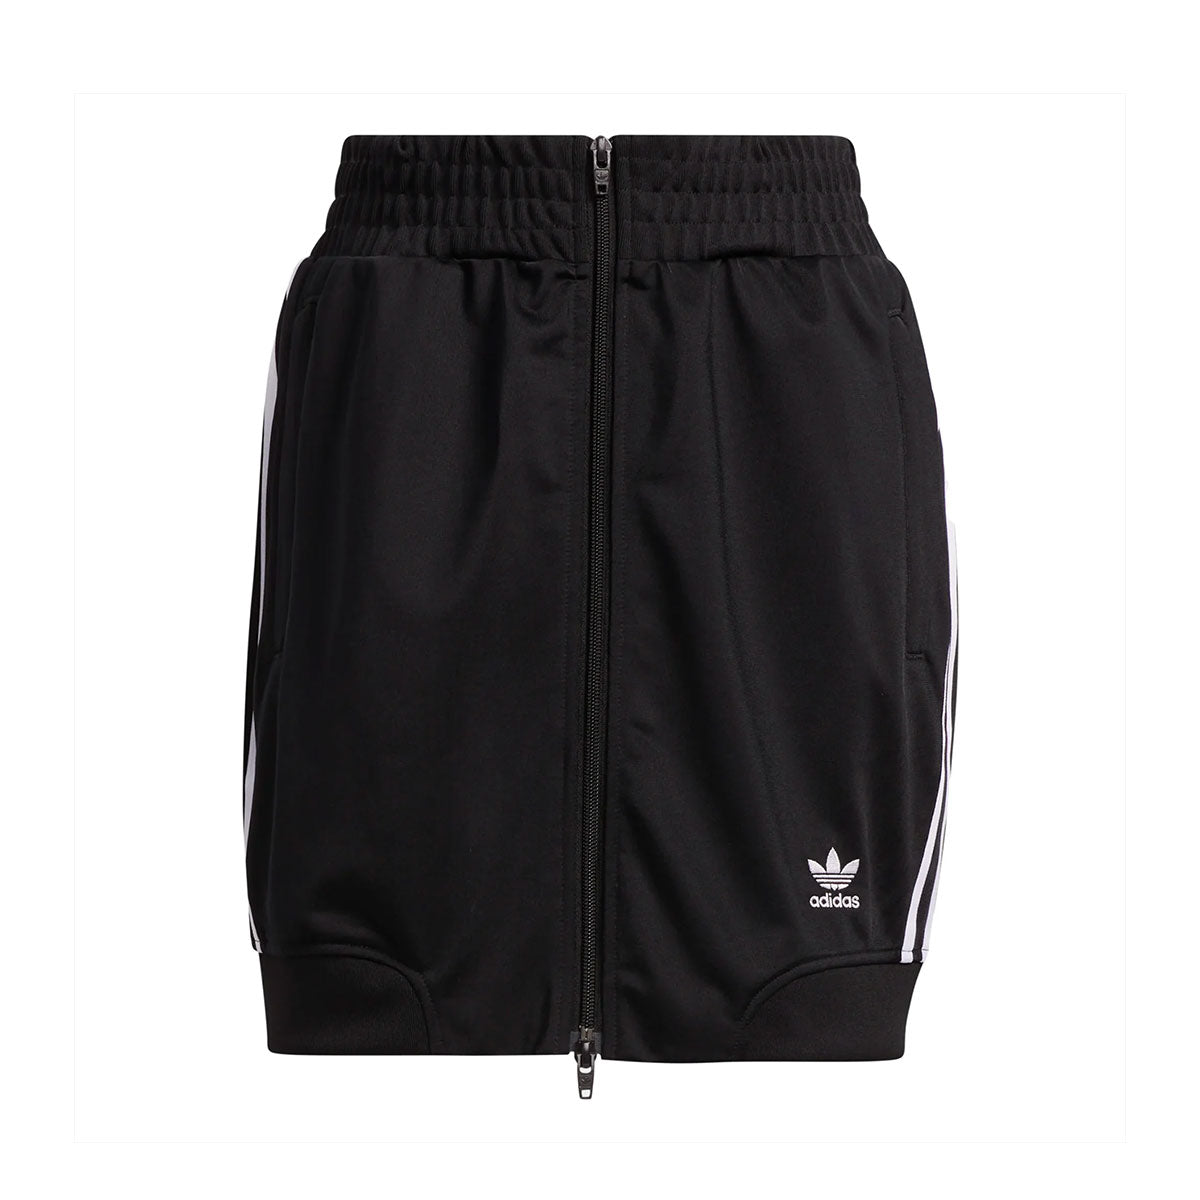 Adidas Women's Black Jeremy Scott Skirt